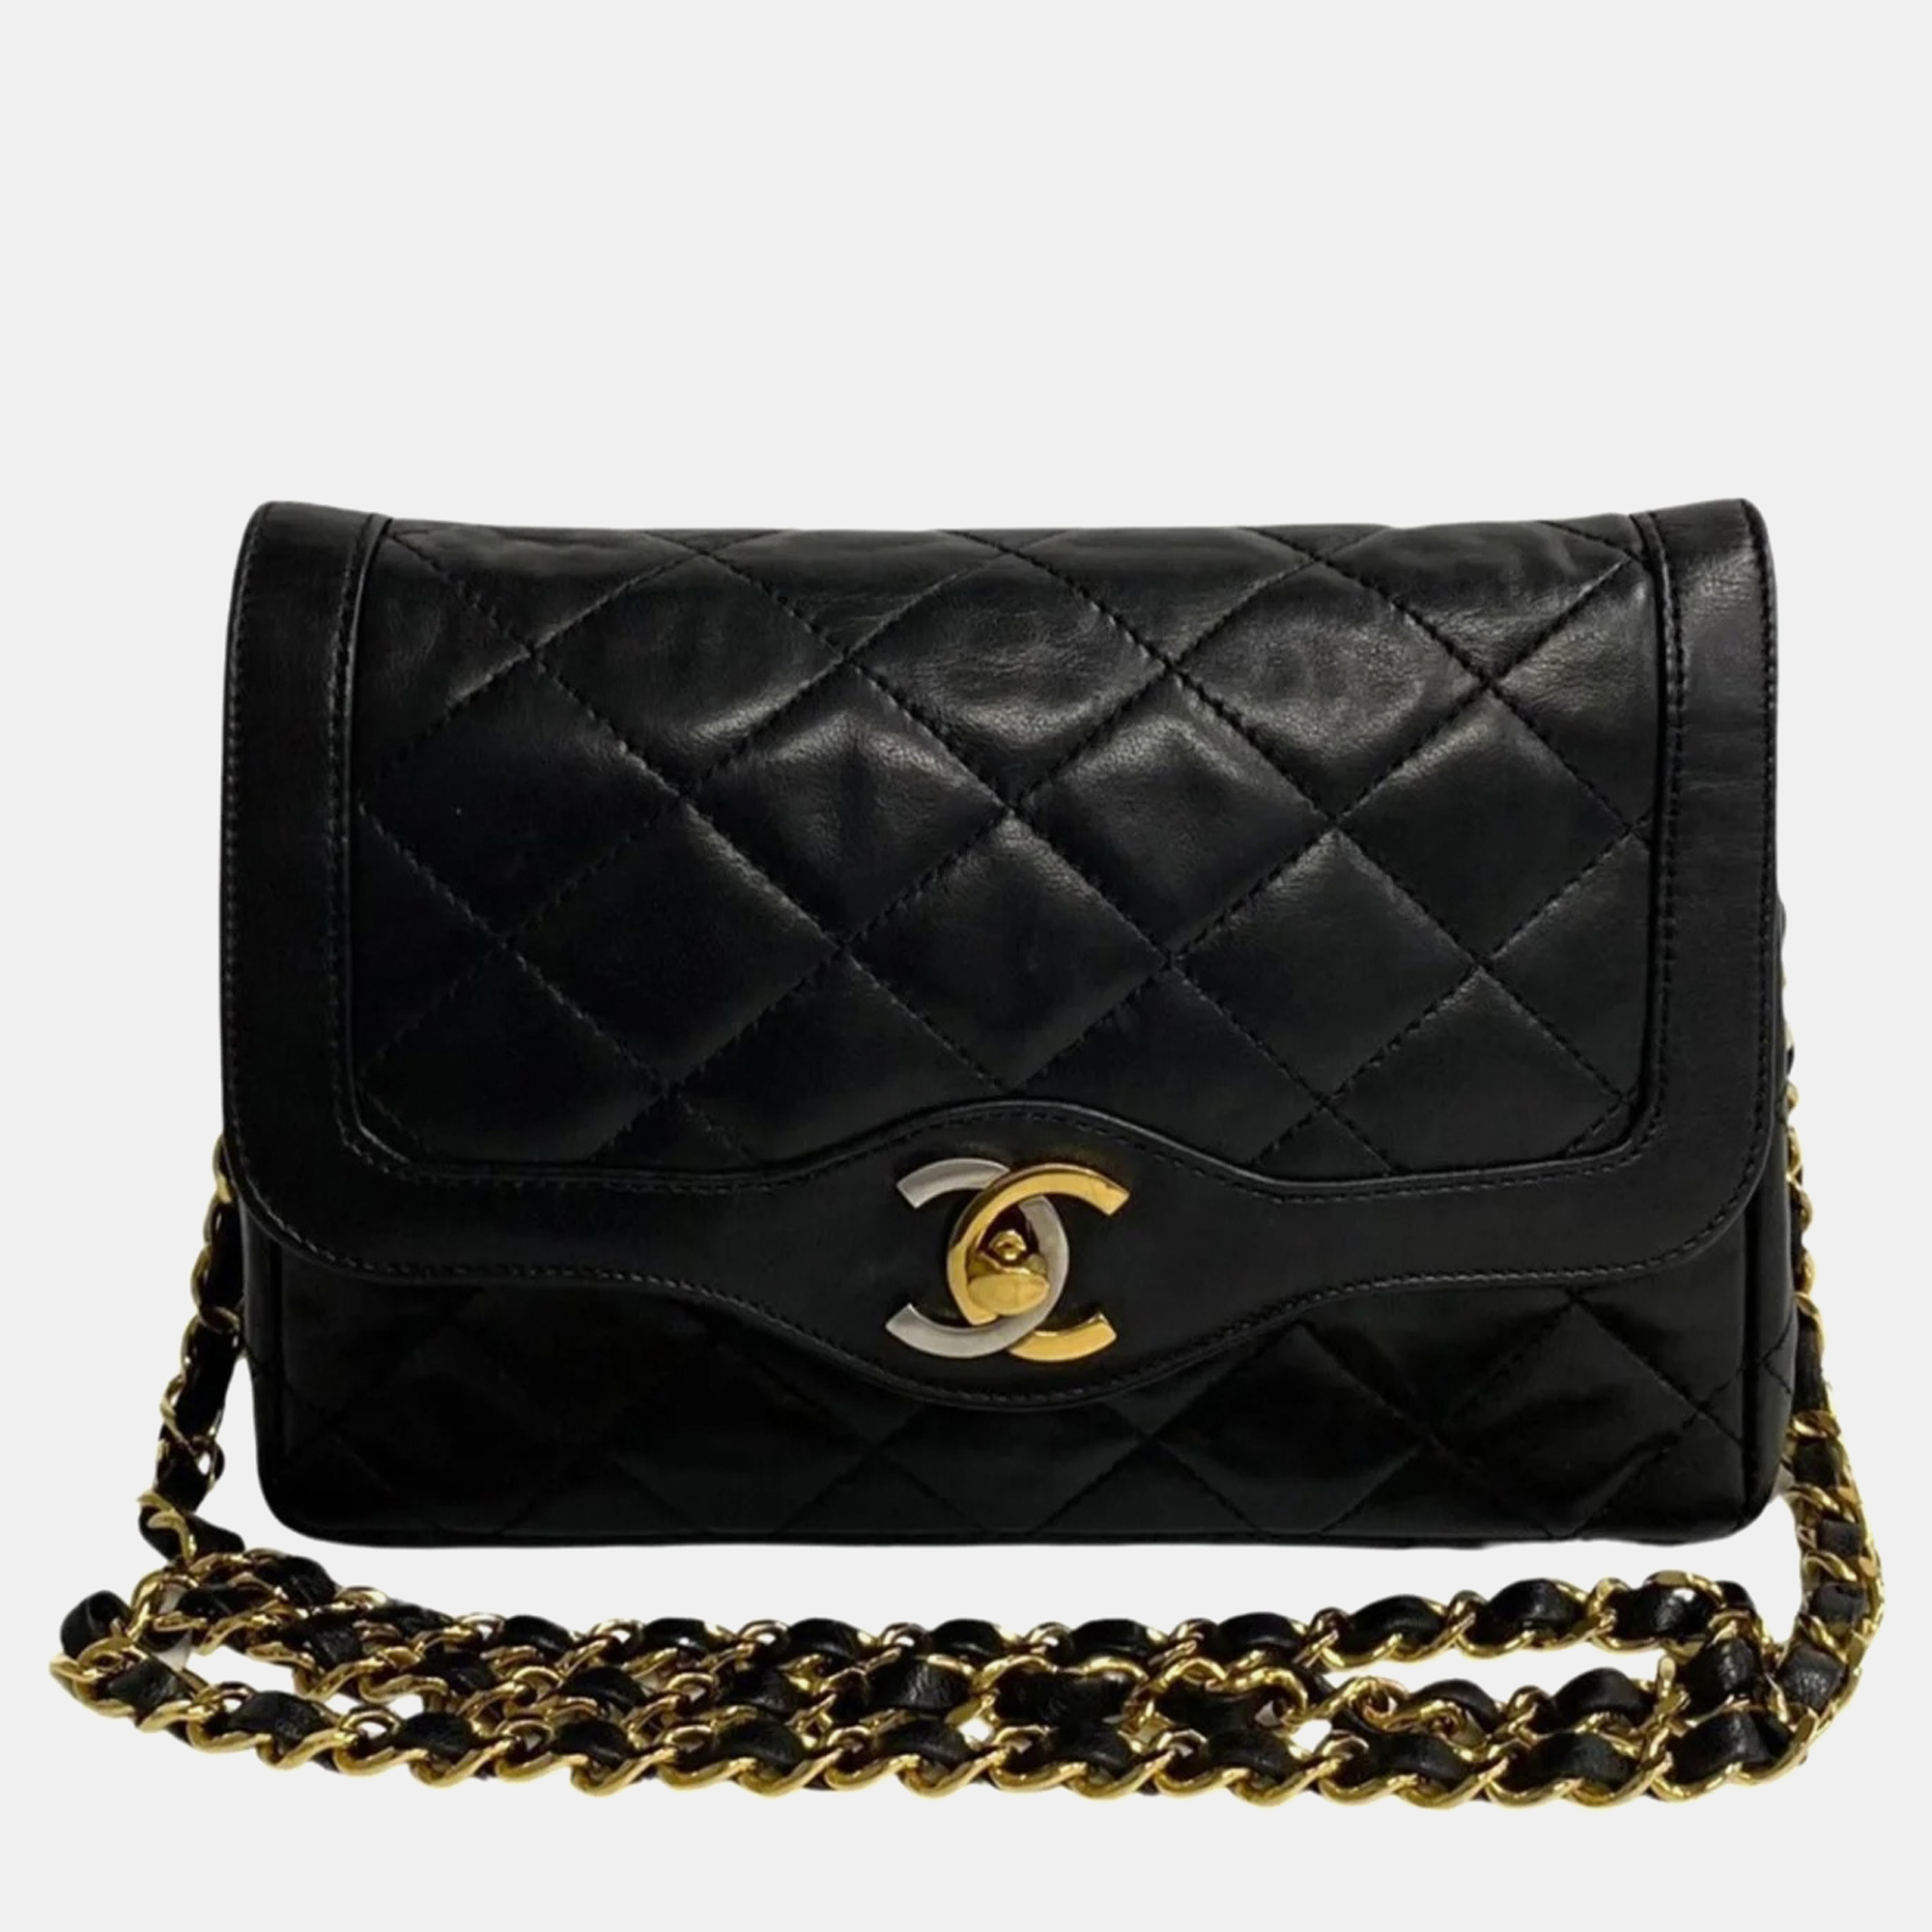 Chanel black quilted lambskin vintage mini paris-limited flap bag